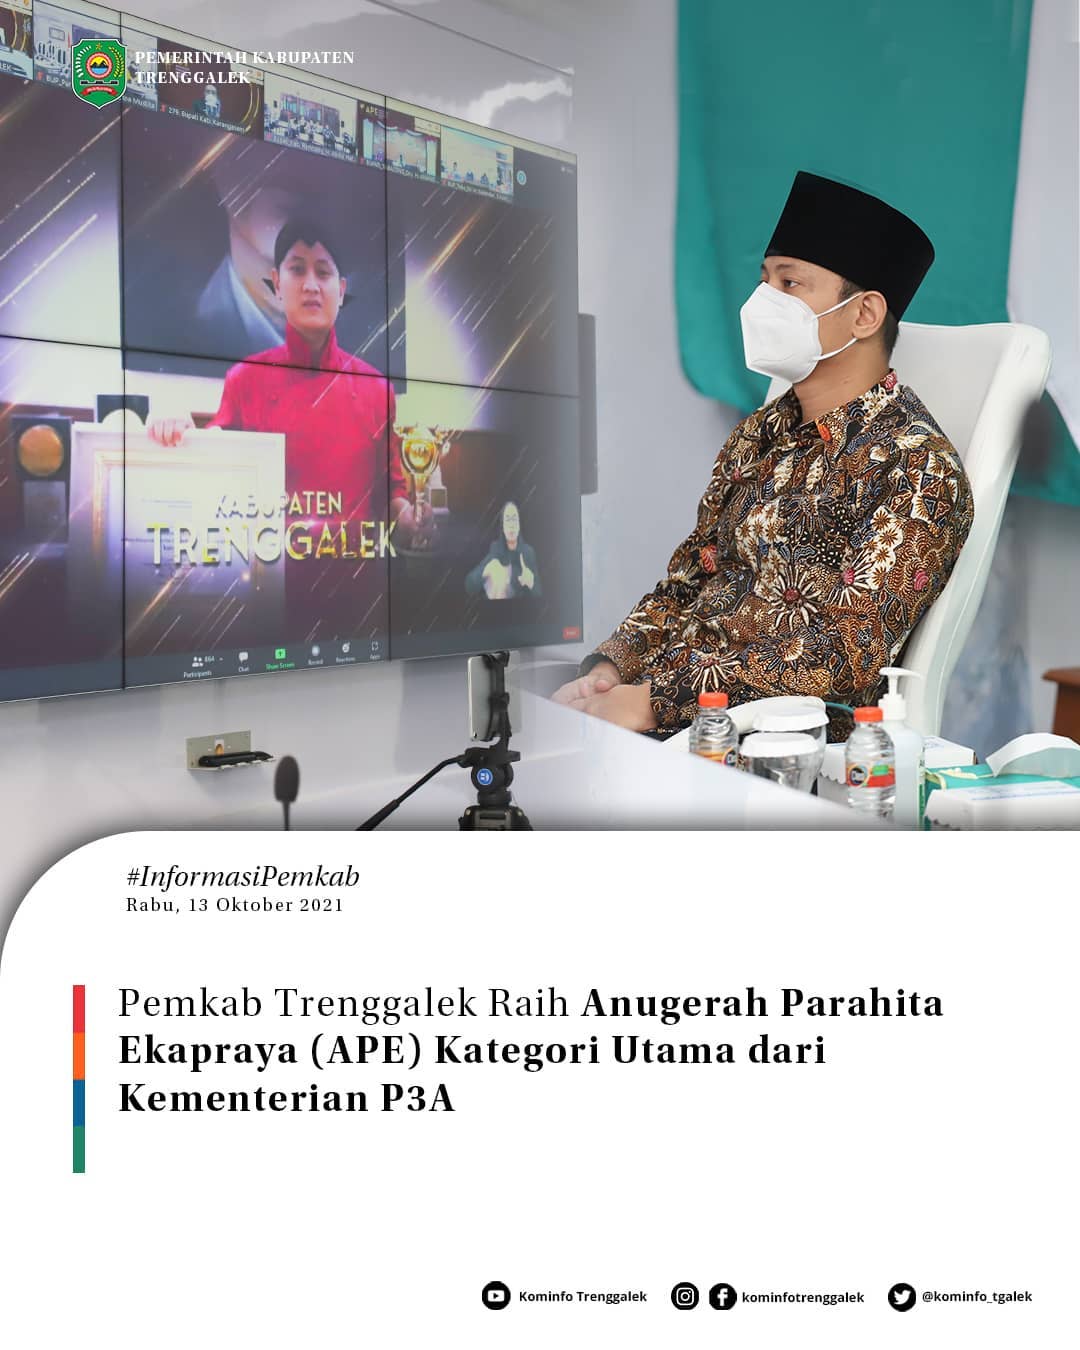 Pemkab Trenggalek Raih Anugerah Parahita Ekapraya (APE) Kategori Utama Dari Kementerian P3A